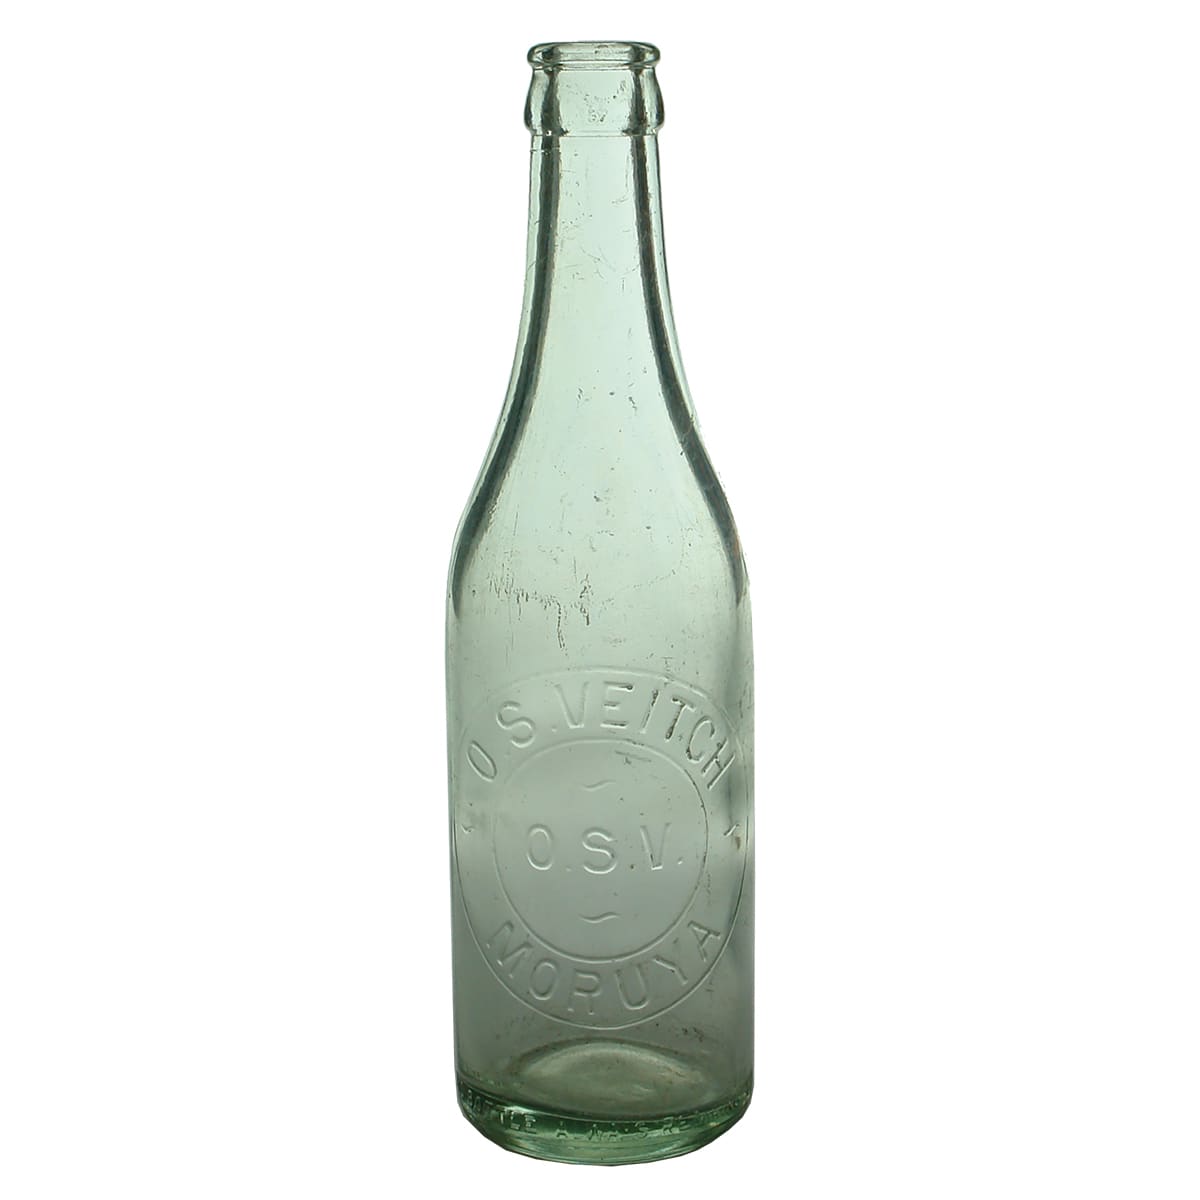 Crown Seal. Veitch, Moruya. Champagne. Aqua. 10 oz. (New South Wales)